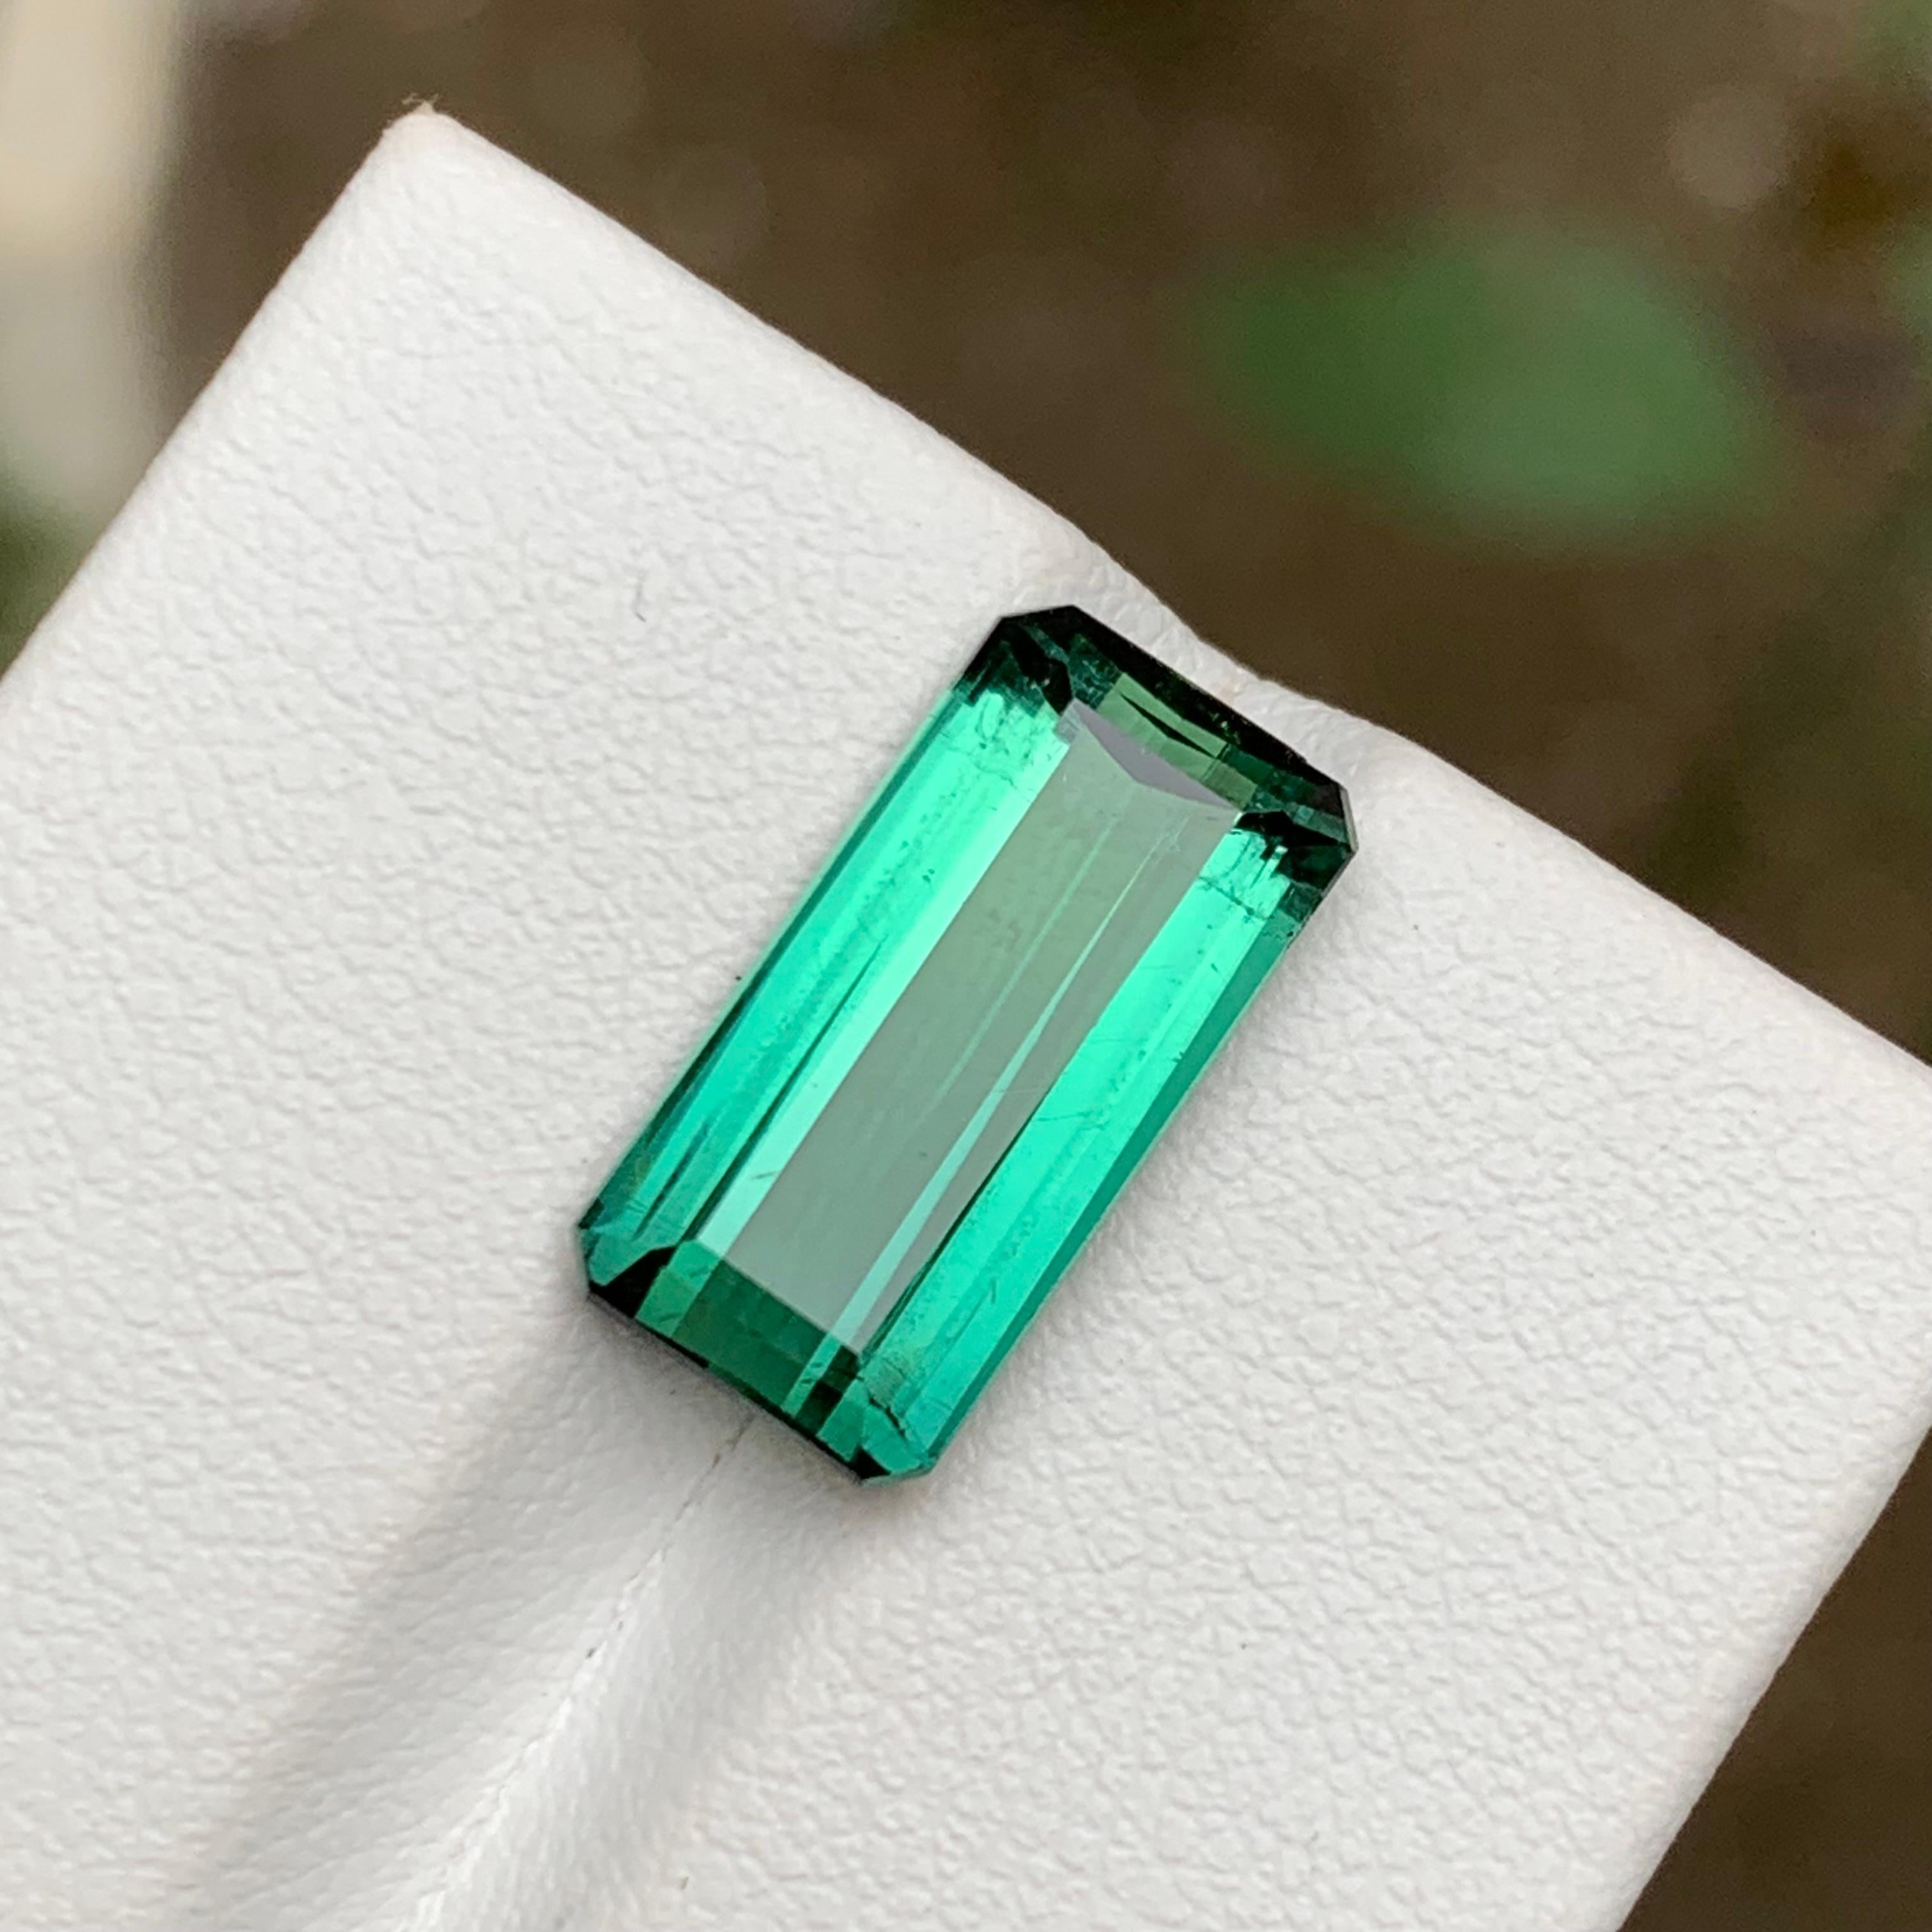 Rare Bluish Neon Green Natural Tourmaline Gemstone, 6.25 Ct Emerald Cut for Ring For Sale 4